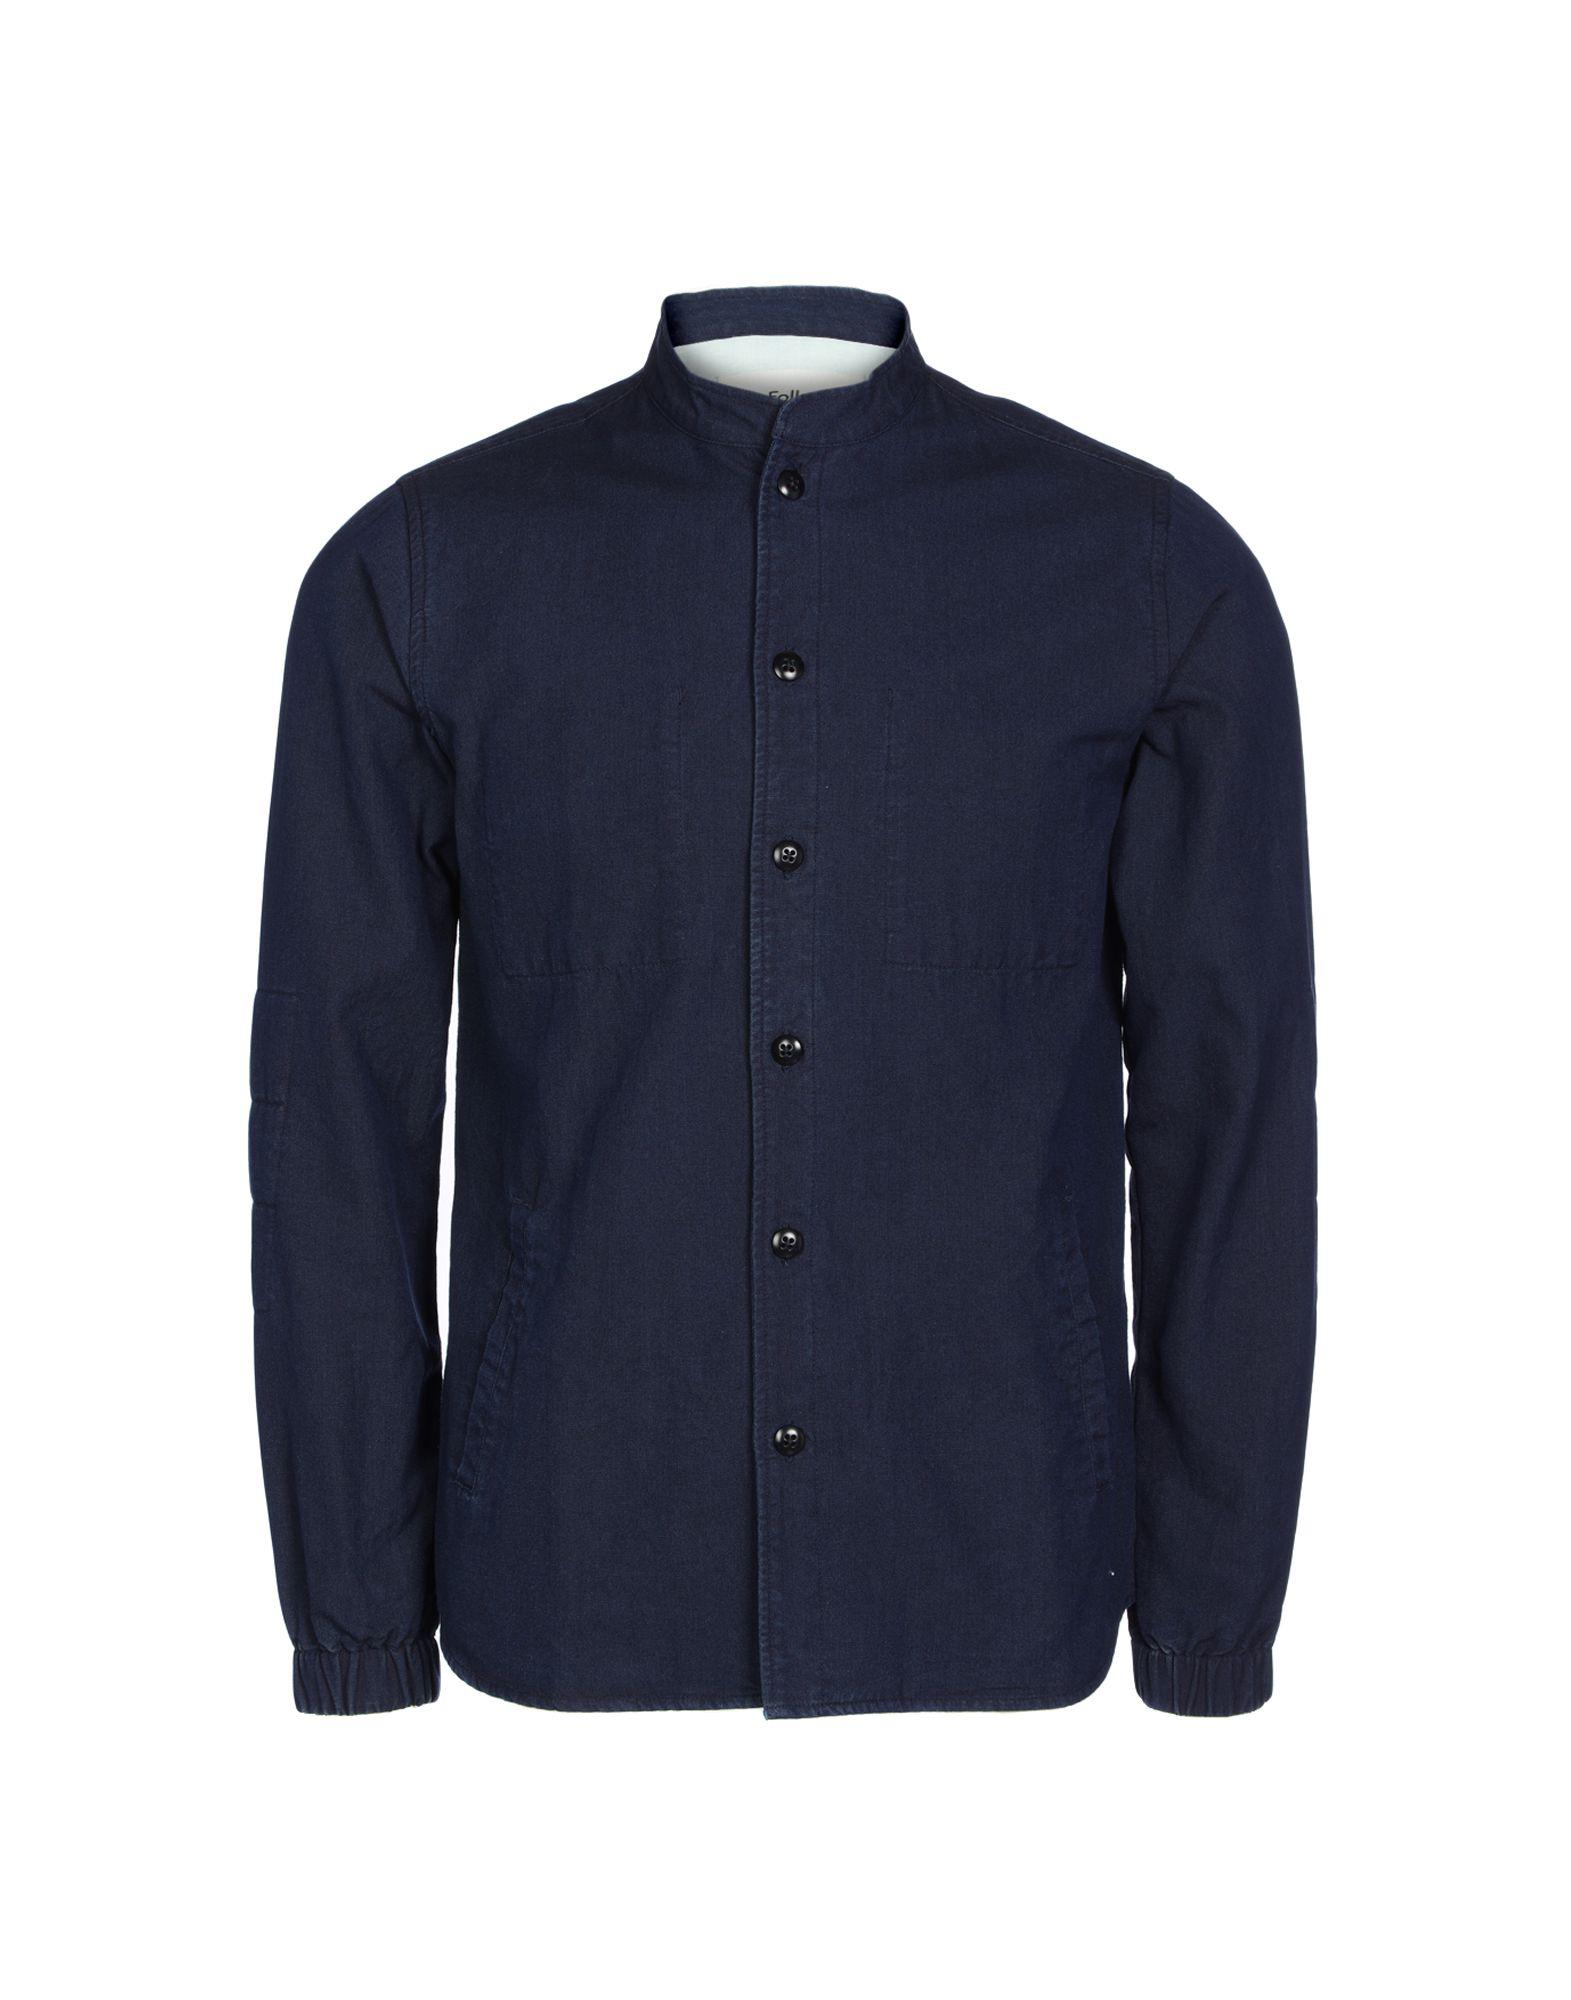 Folk Cotton Jacket in Dark Blue (Blue) for Men - Lyst